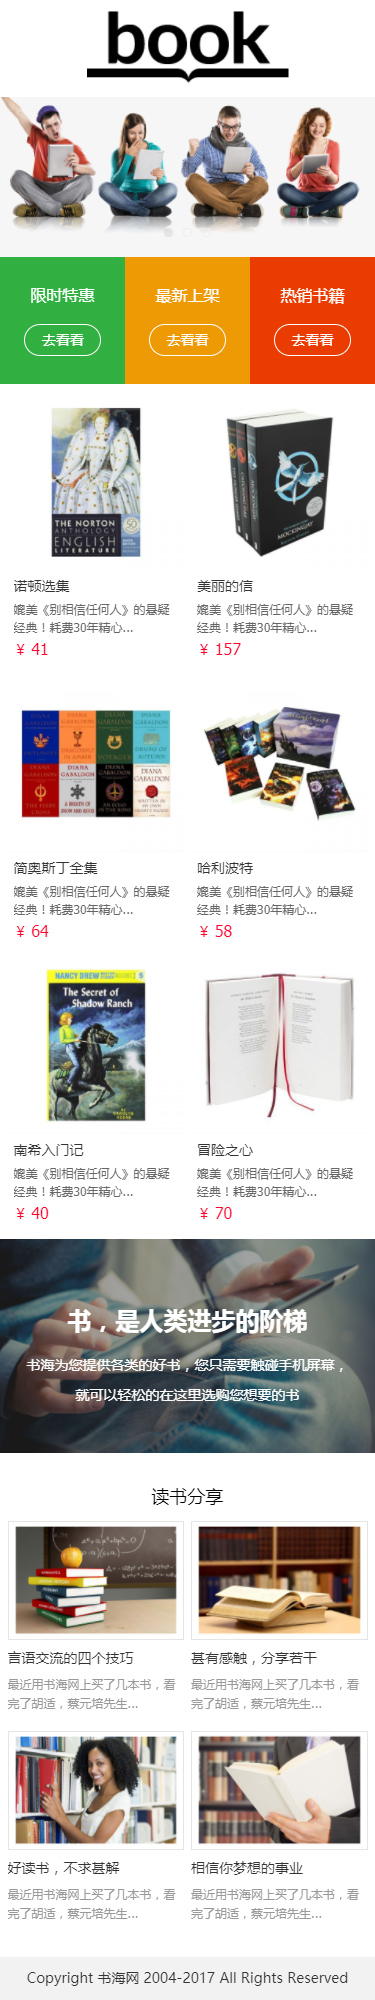 book购书平台商城模板